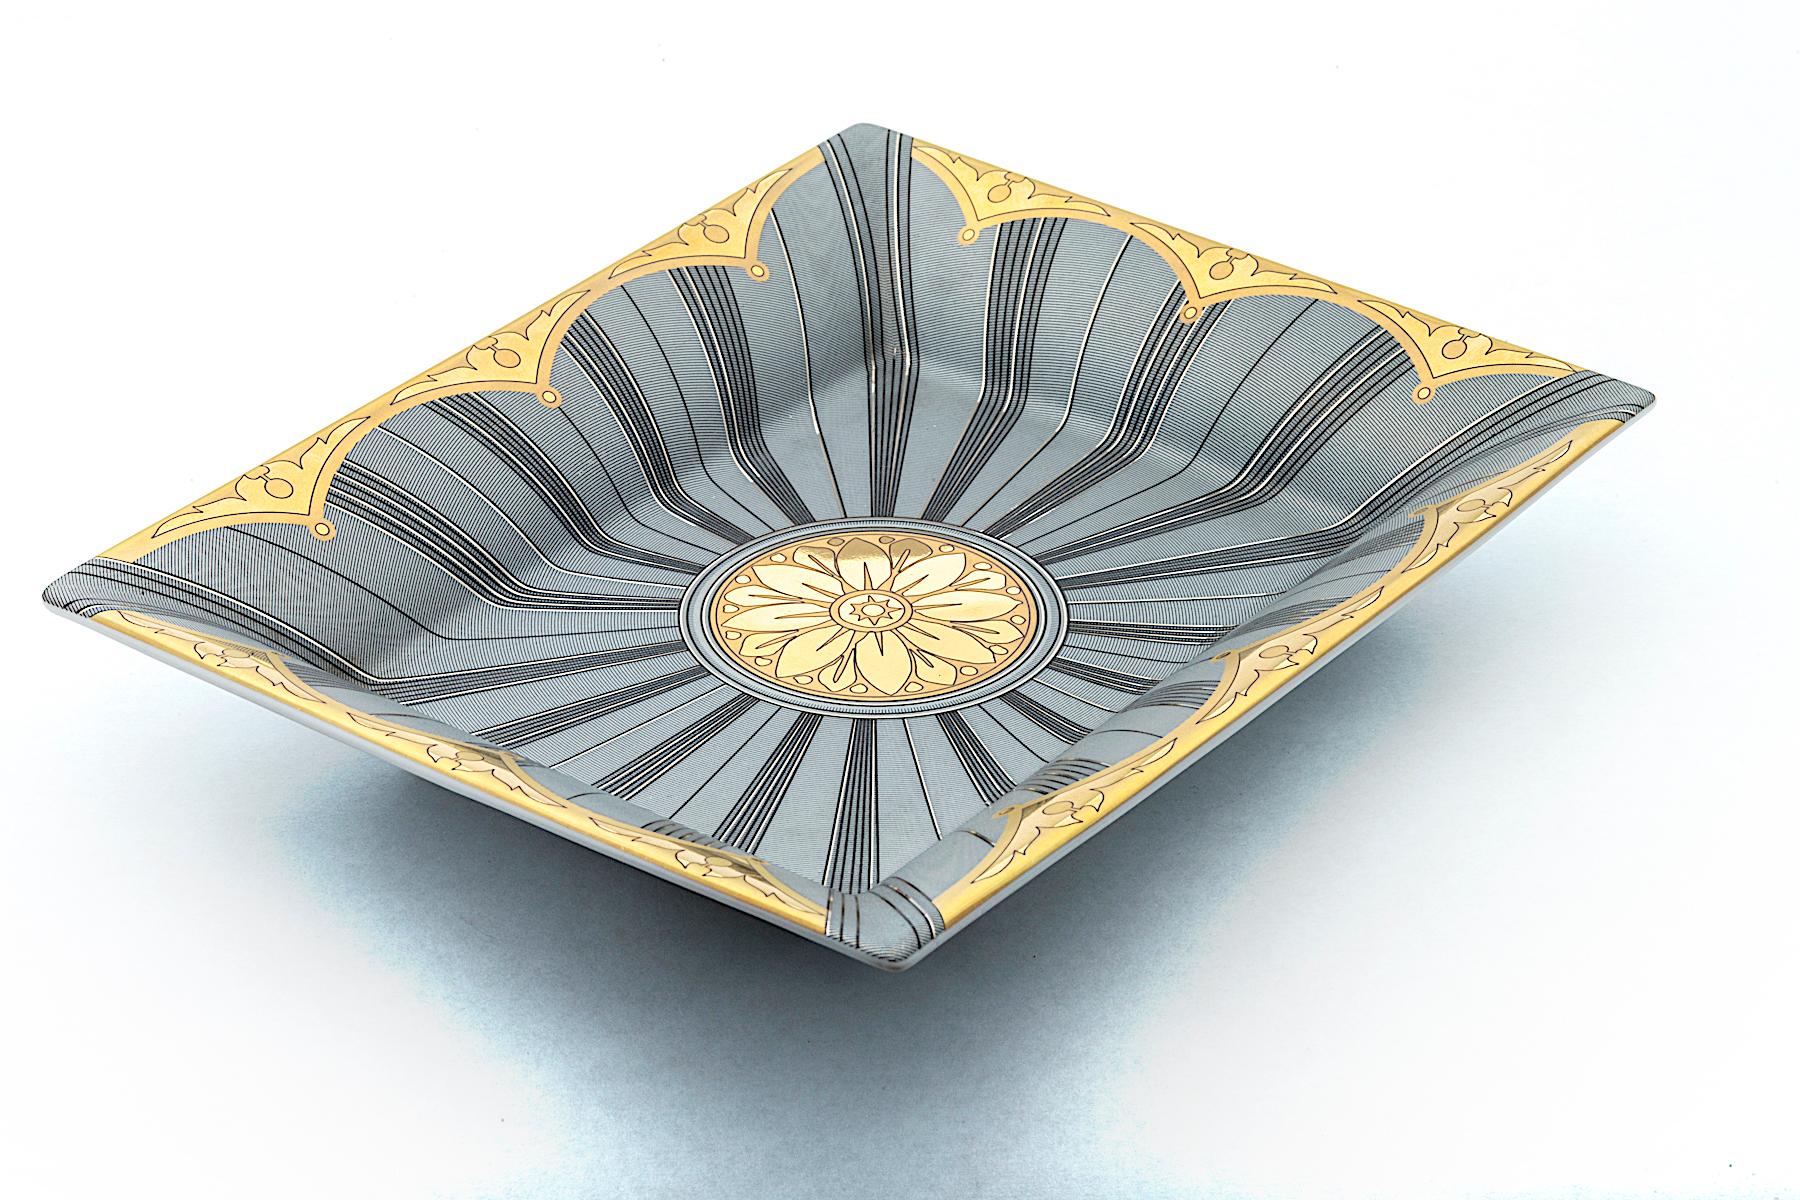 Patek Philippe Commemorative Limited Edition Limoge Porcelain Trays 4